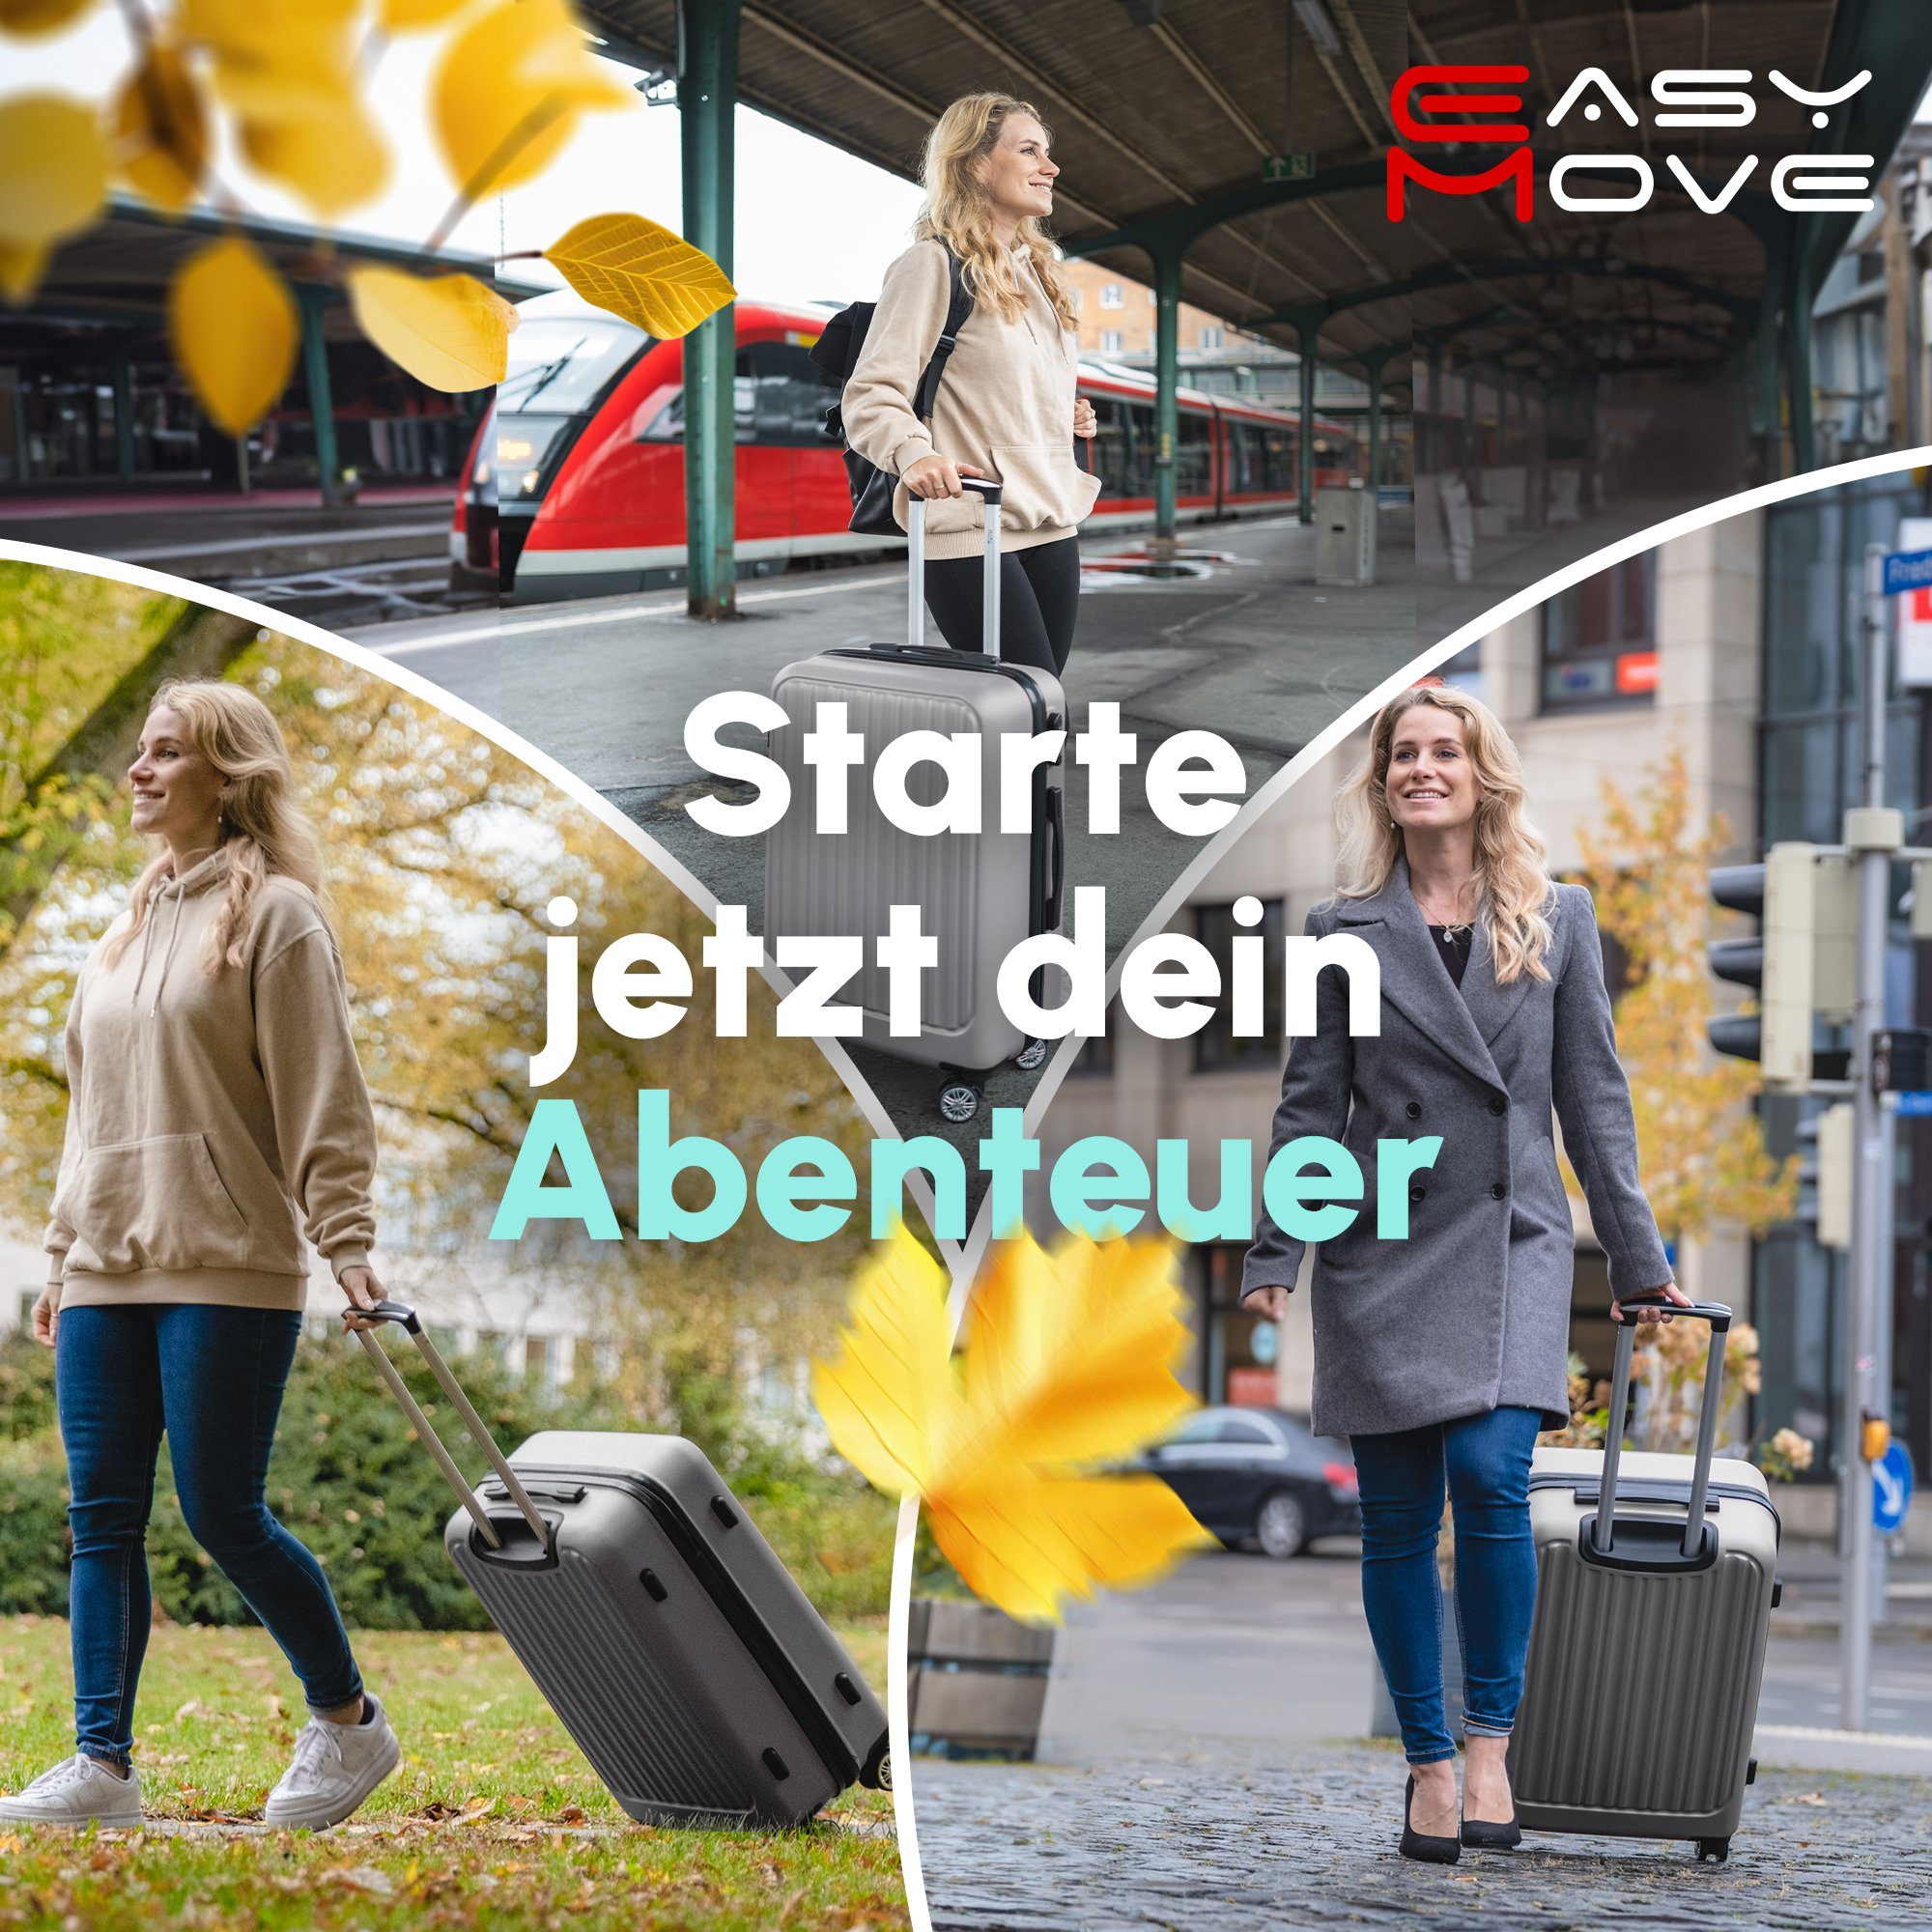 Hartschalen-Koffer, Silver Doppelrollen, Hartschalen-Trolley Ace Gray Easy Reisekoffer 026, Move ABS 360° 100%